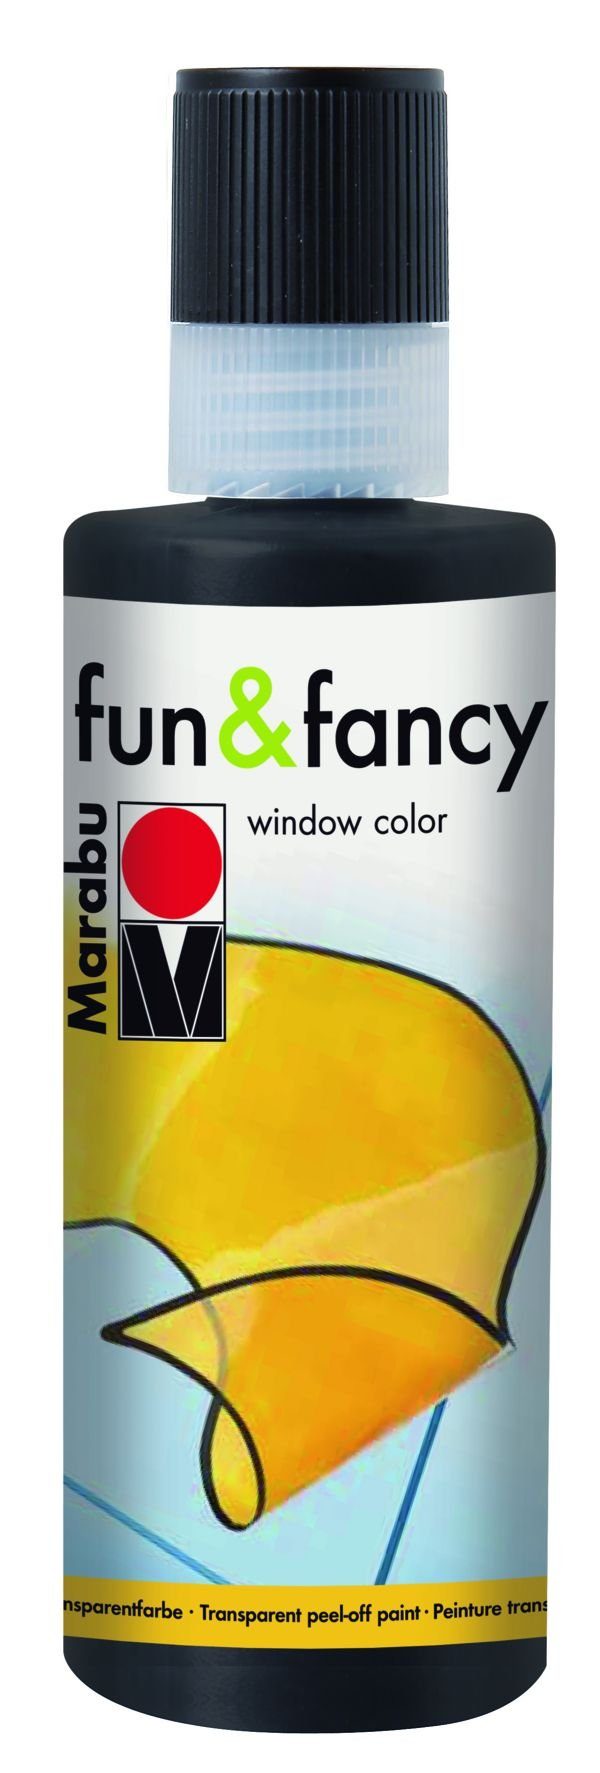 Kugelschreiber Color - Soft-Konturen-Schwarz Marabu Window fun&fancy